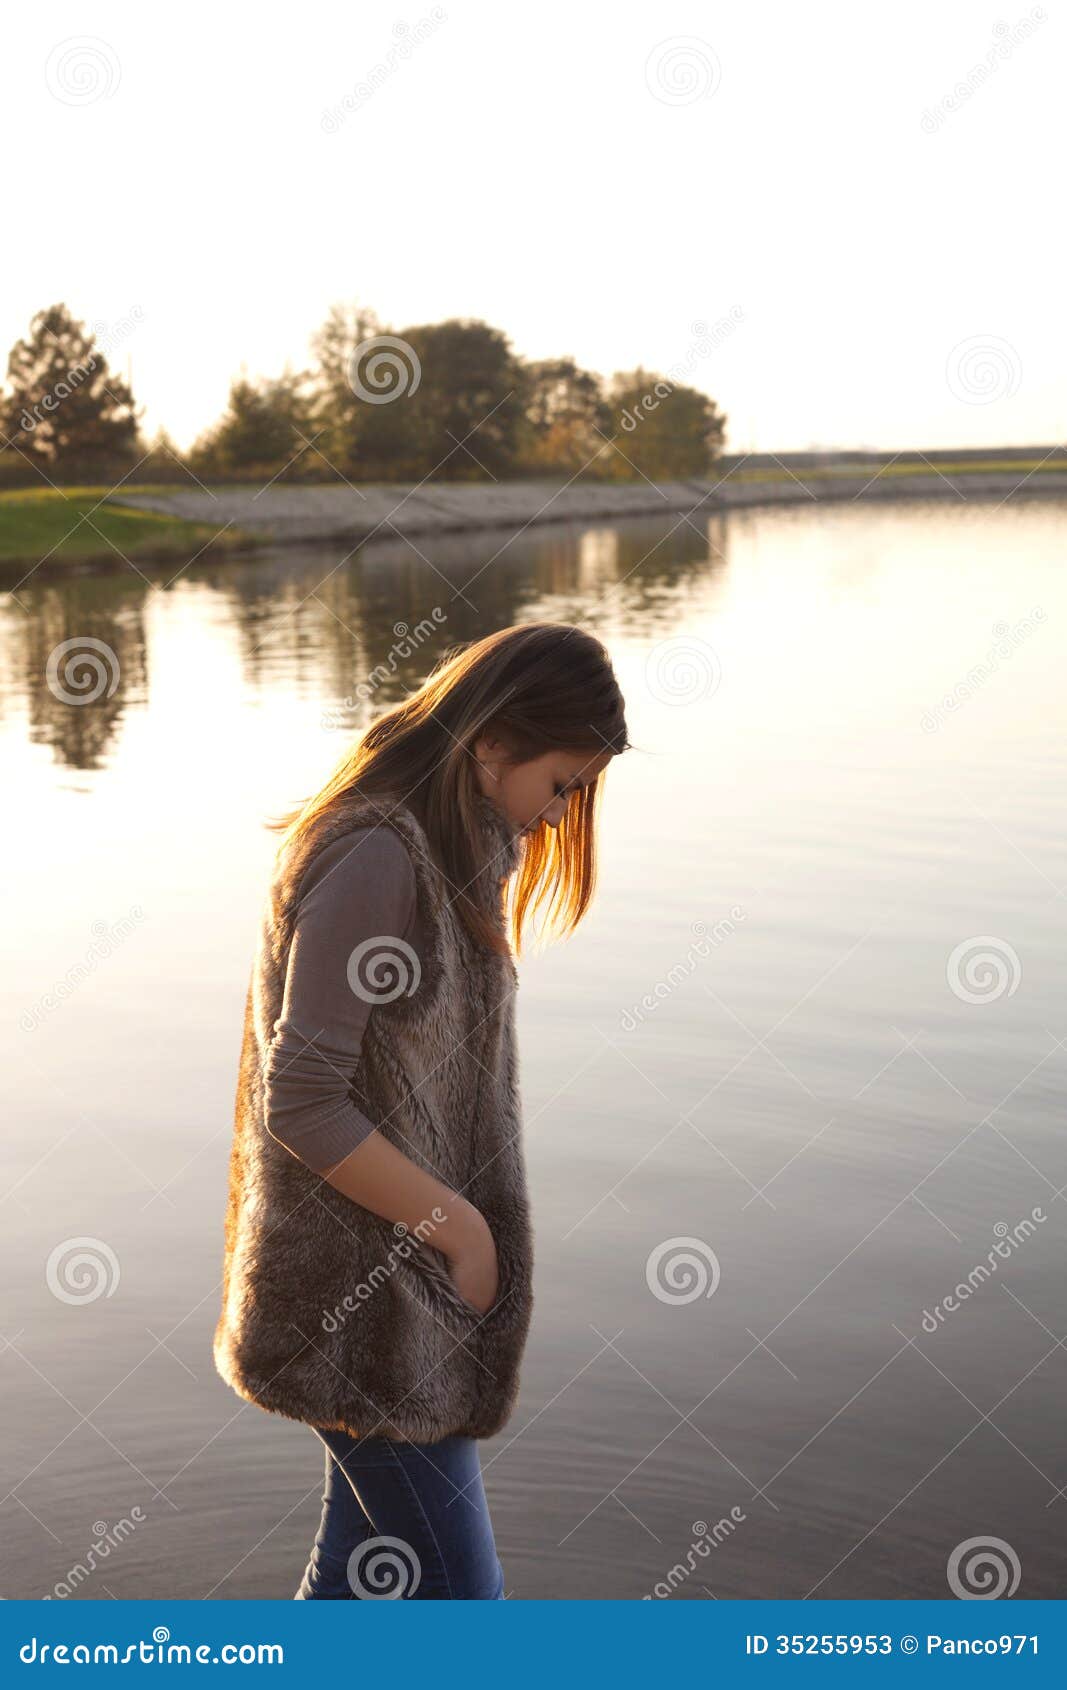 Sad Girl Walking on the Beach Stock Image - Image of despair ...